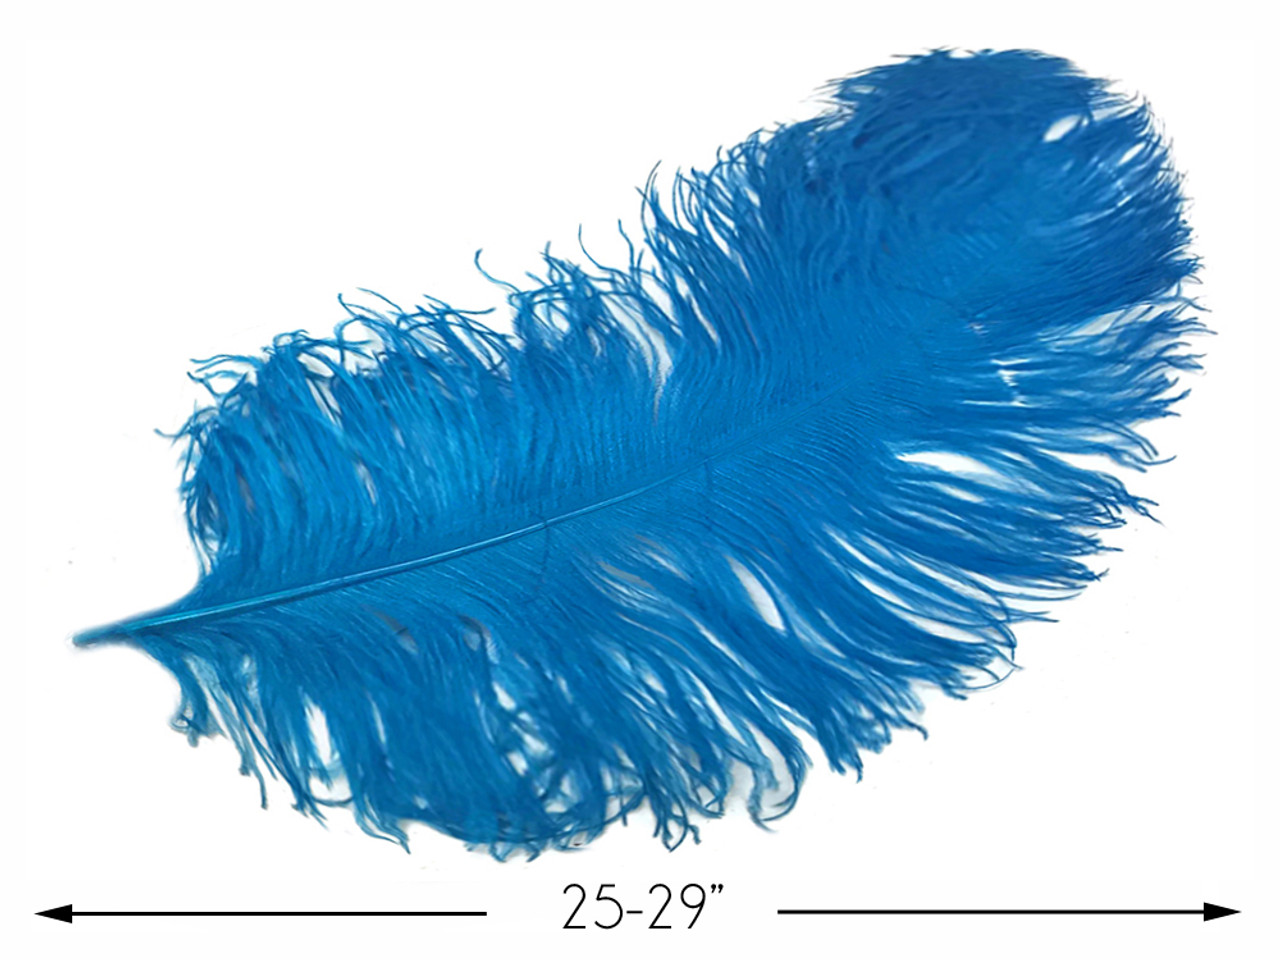 1/2 lb - 18-24 BLACK Large Wing Plumes Wholesale Feathers (bulk) SWA